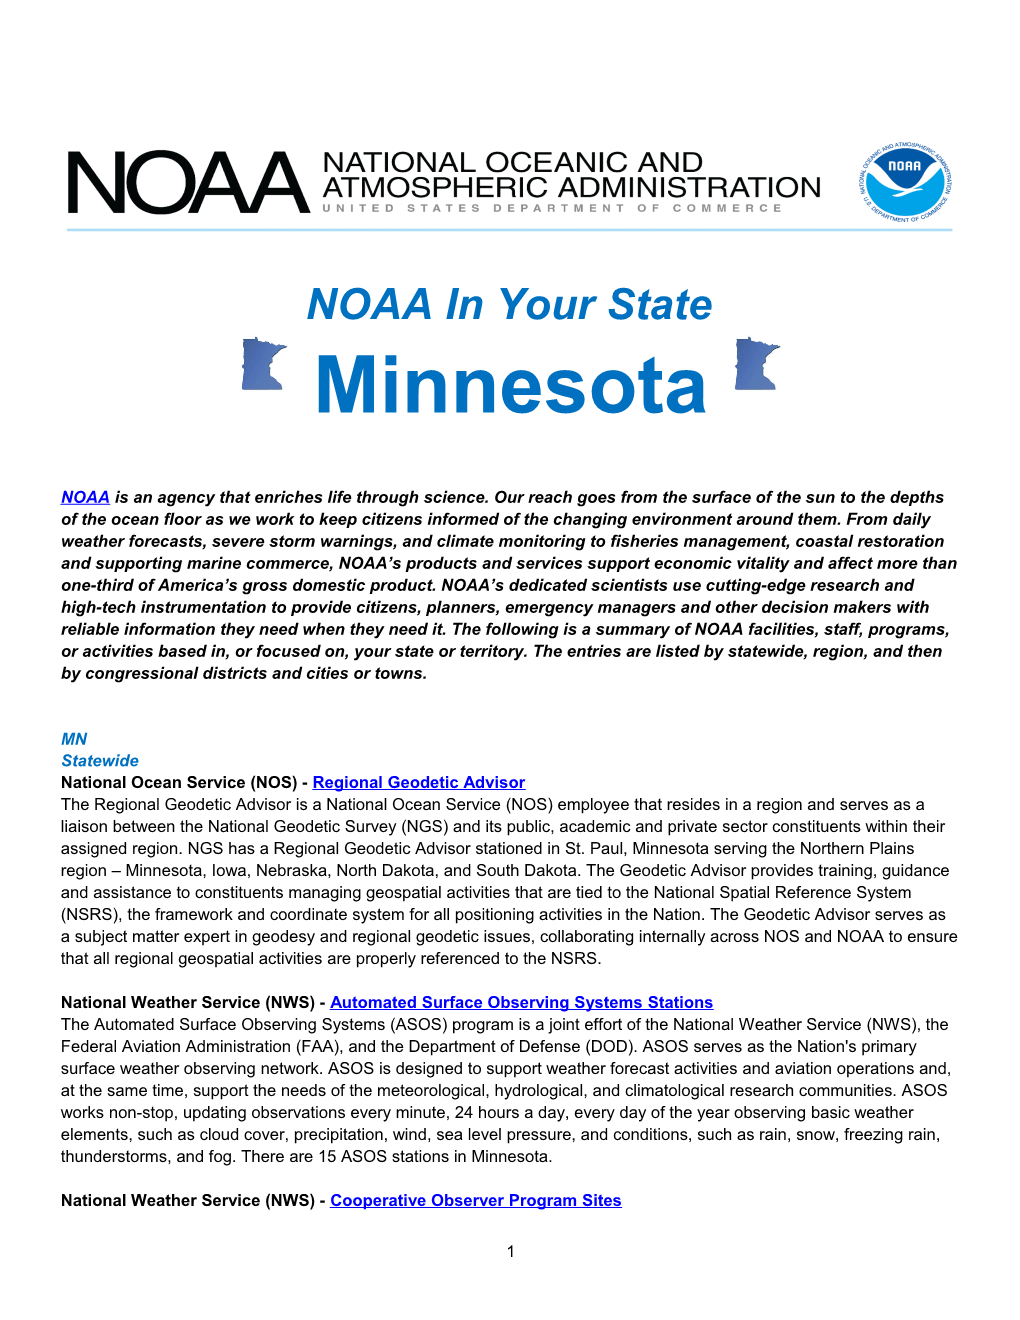 NOAA in Your State - Minnesota